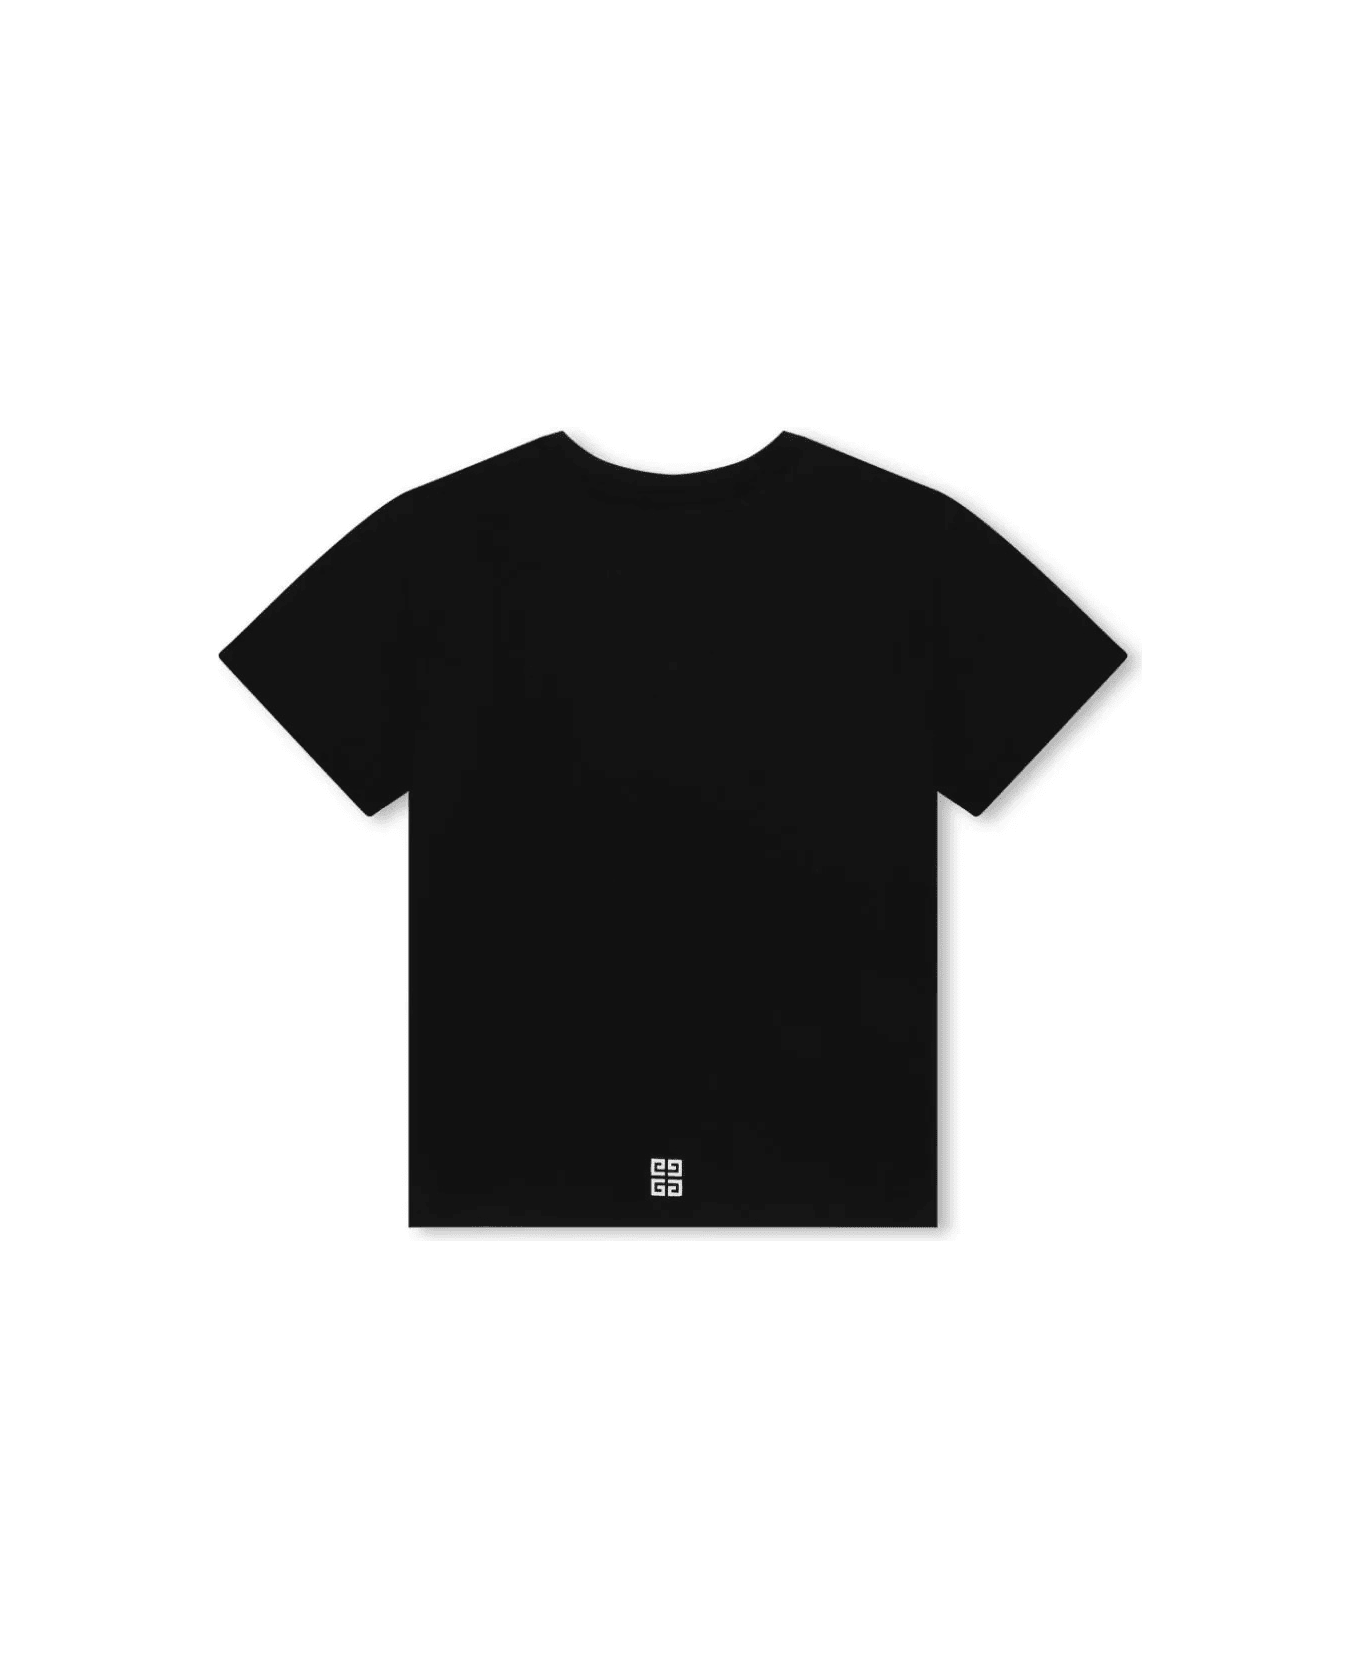 Givenchy Black Givenchy 4g T-shirt - Nero Tシャツ＆ポロシャツ